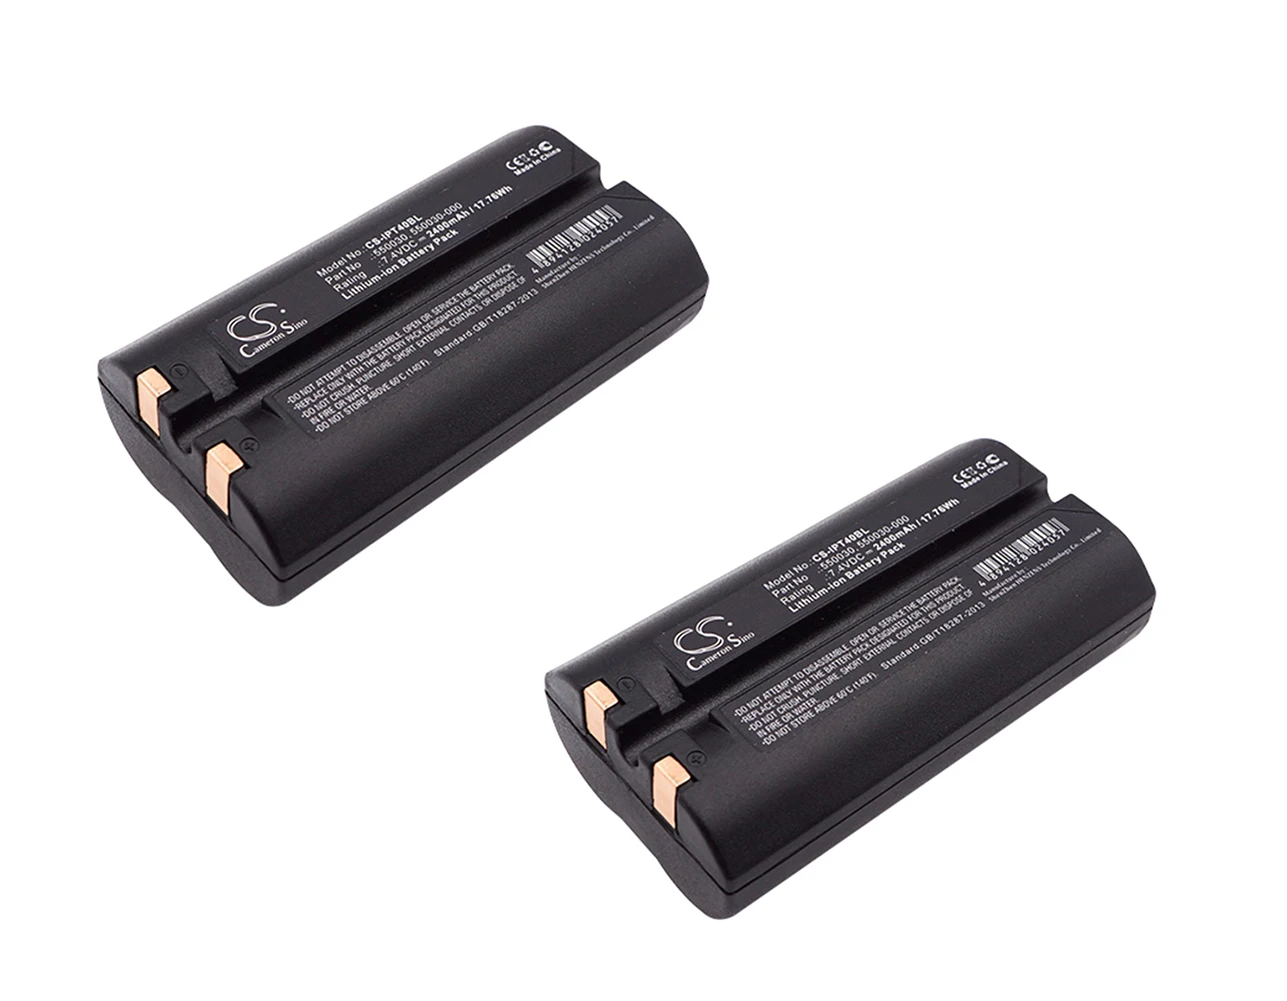 

2pack 2400mA Battery for ONeil MF2TE,MF4Te,Microflash 4i 200360-101,220531-000,550034-000,550039-100,PB20A,PB40,PB41,PW40